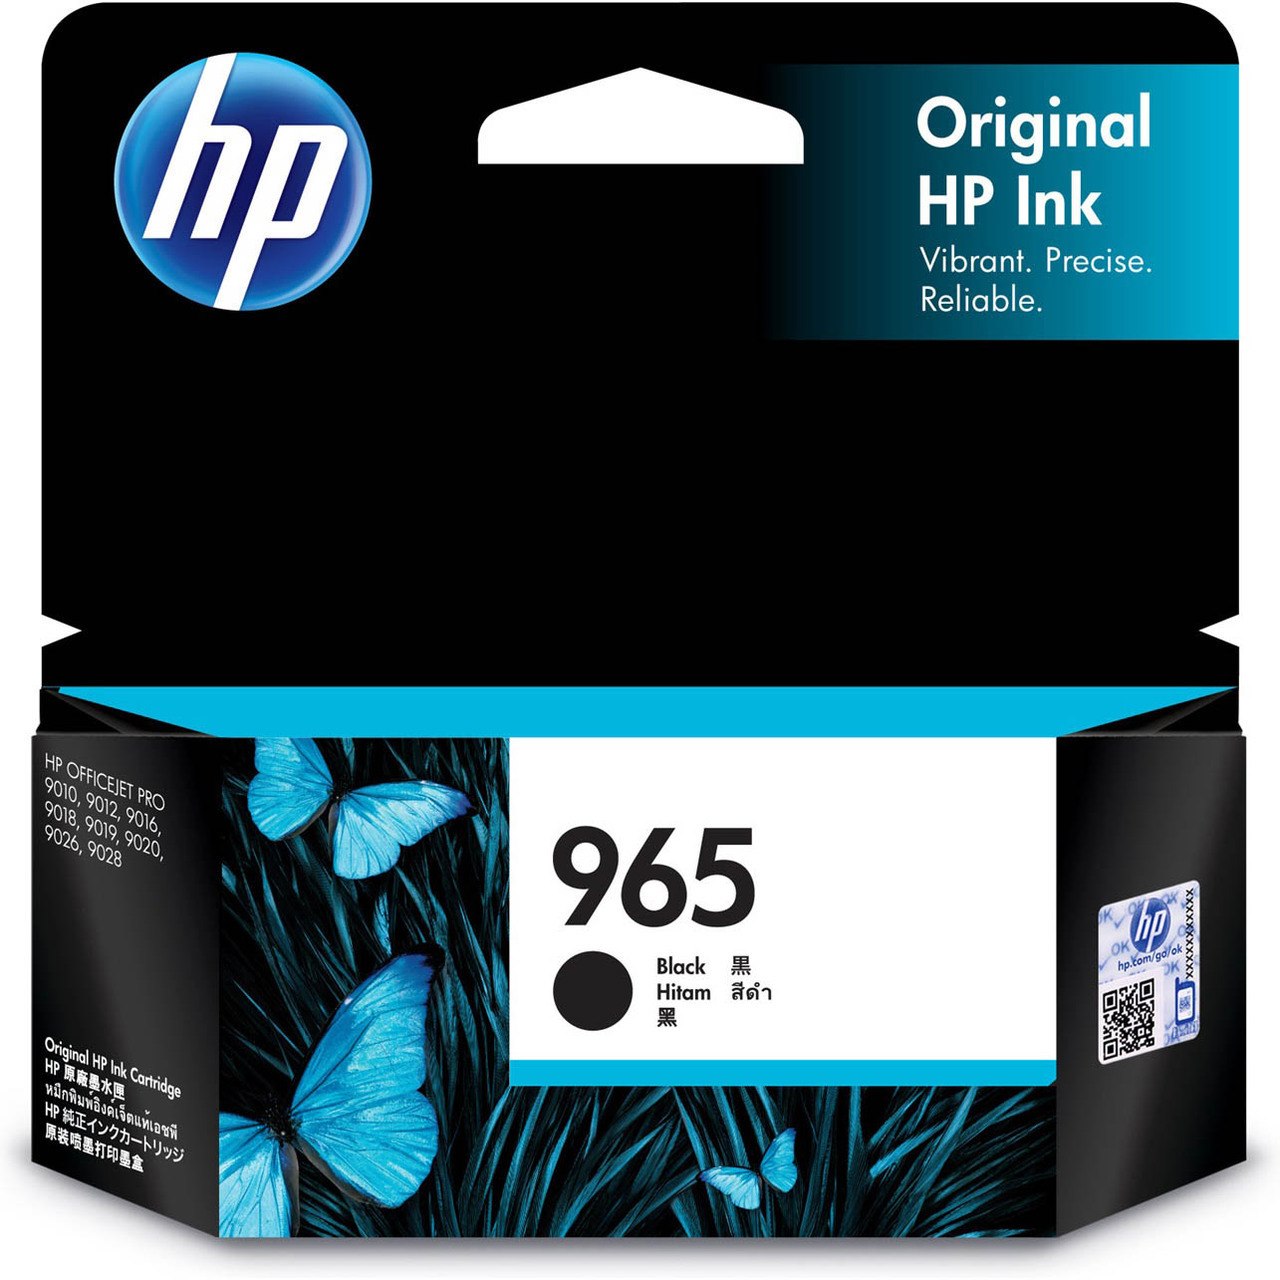 HP 965 Original Ink Cartridge - Black